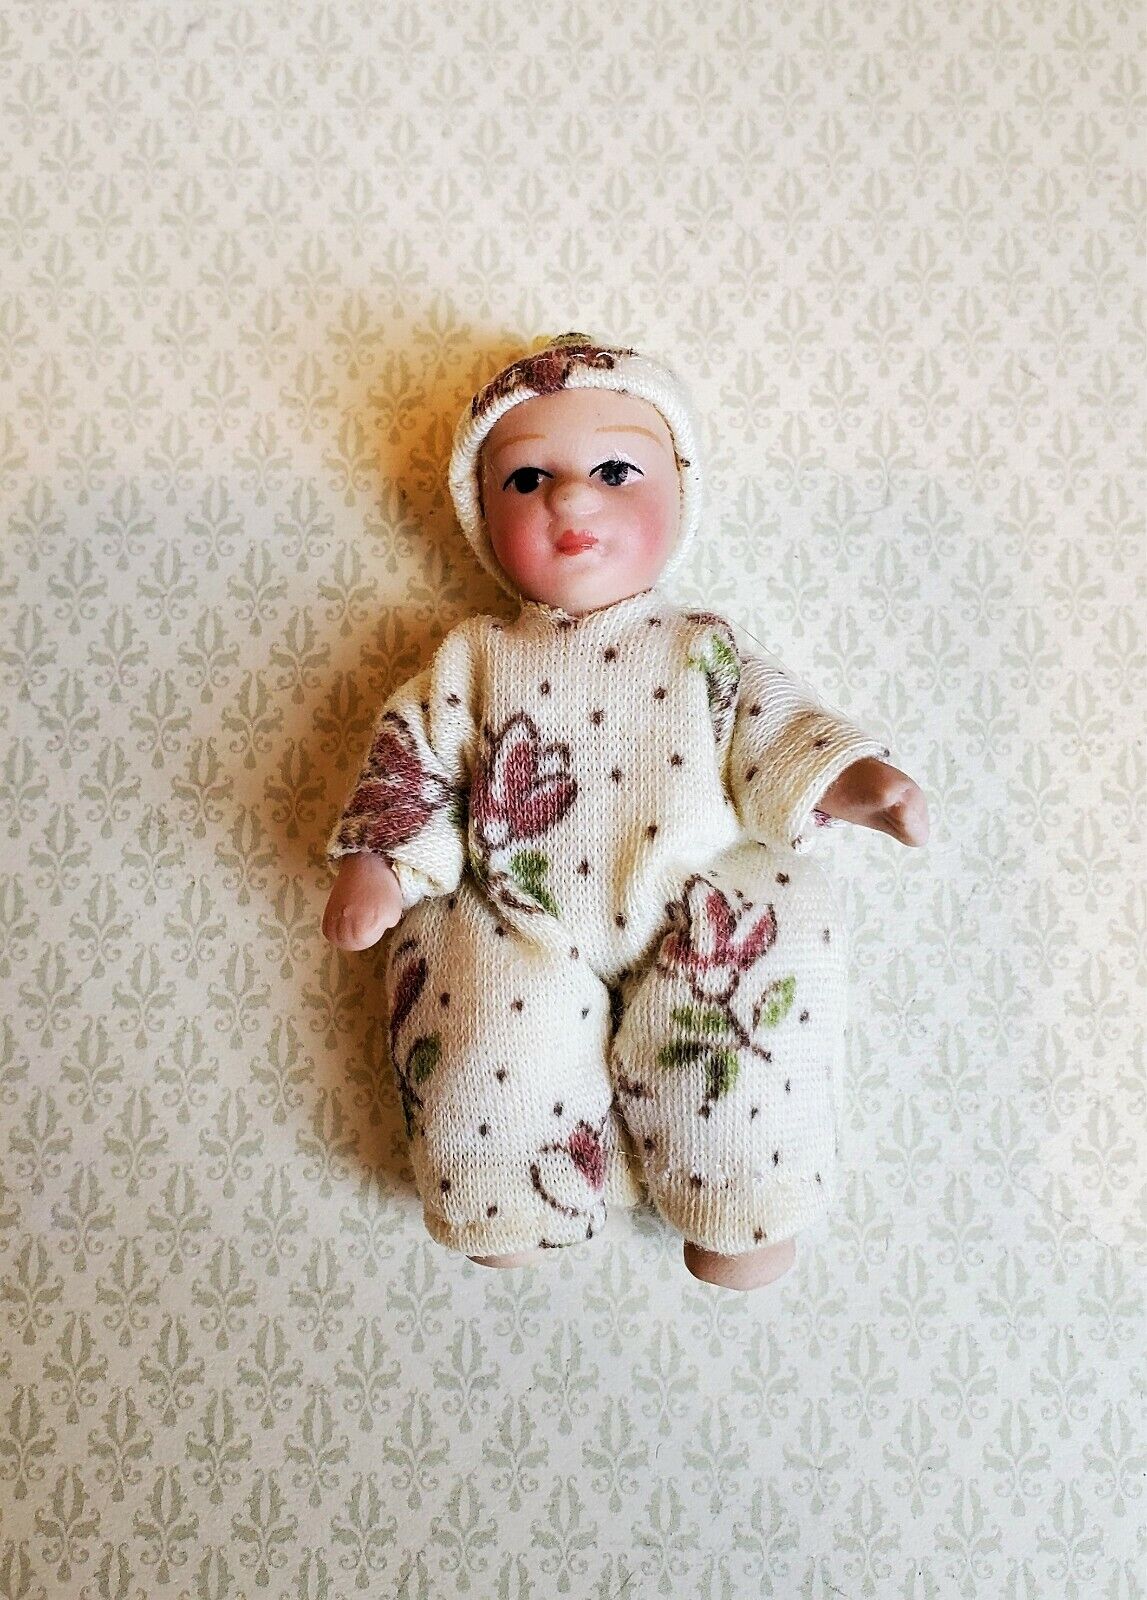 Dollhouse Miniature Baby Doll Porcelain Moveable 1:12 Scale Sleeper Cap